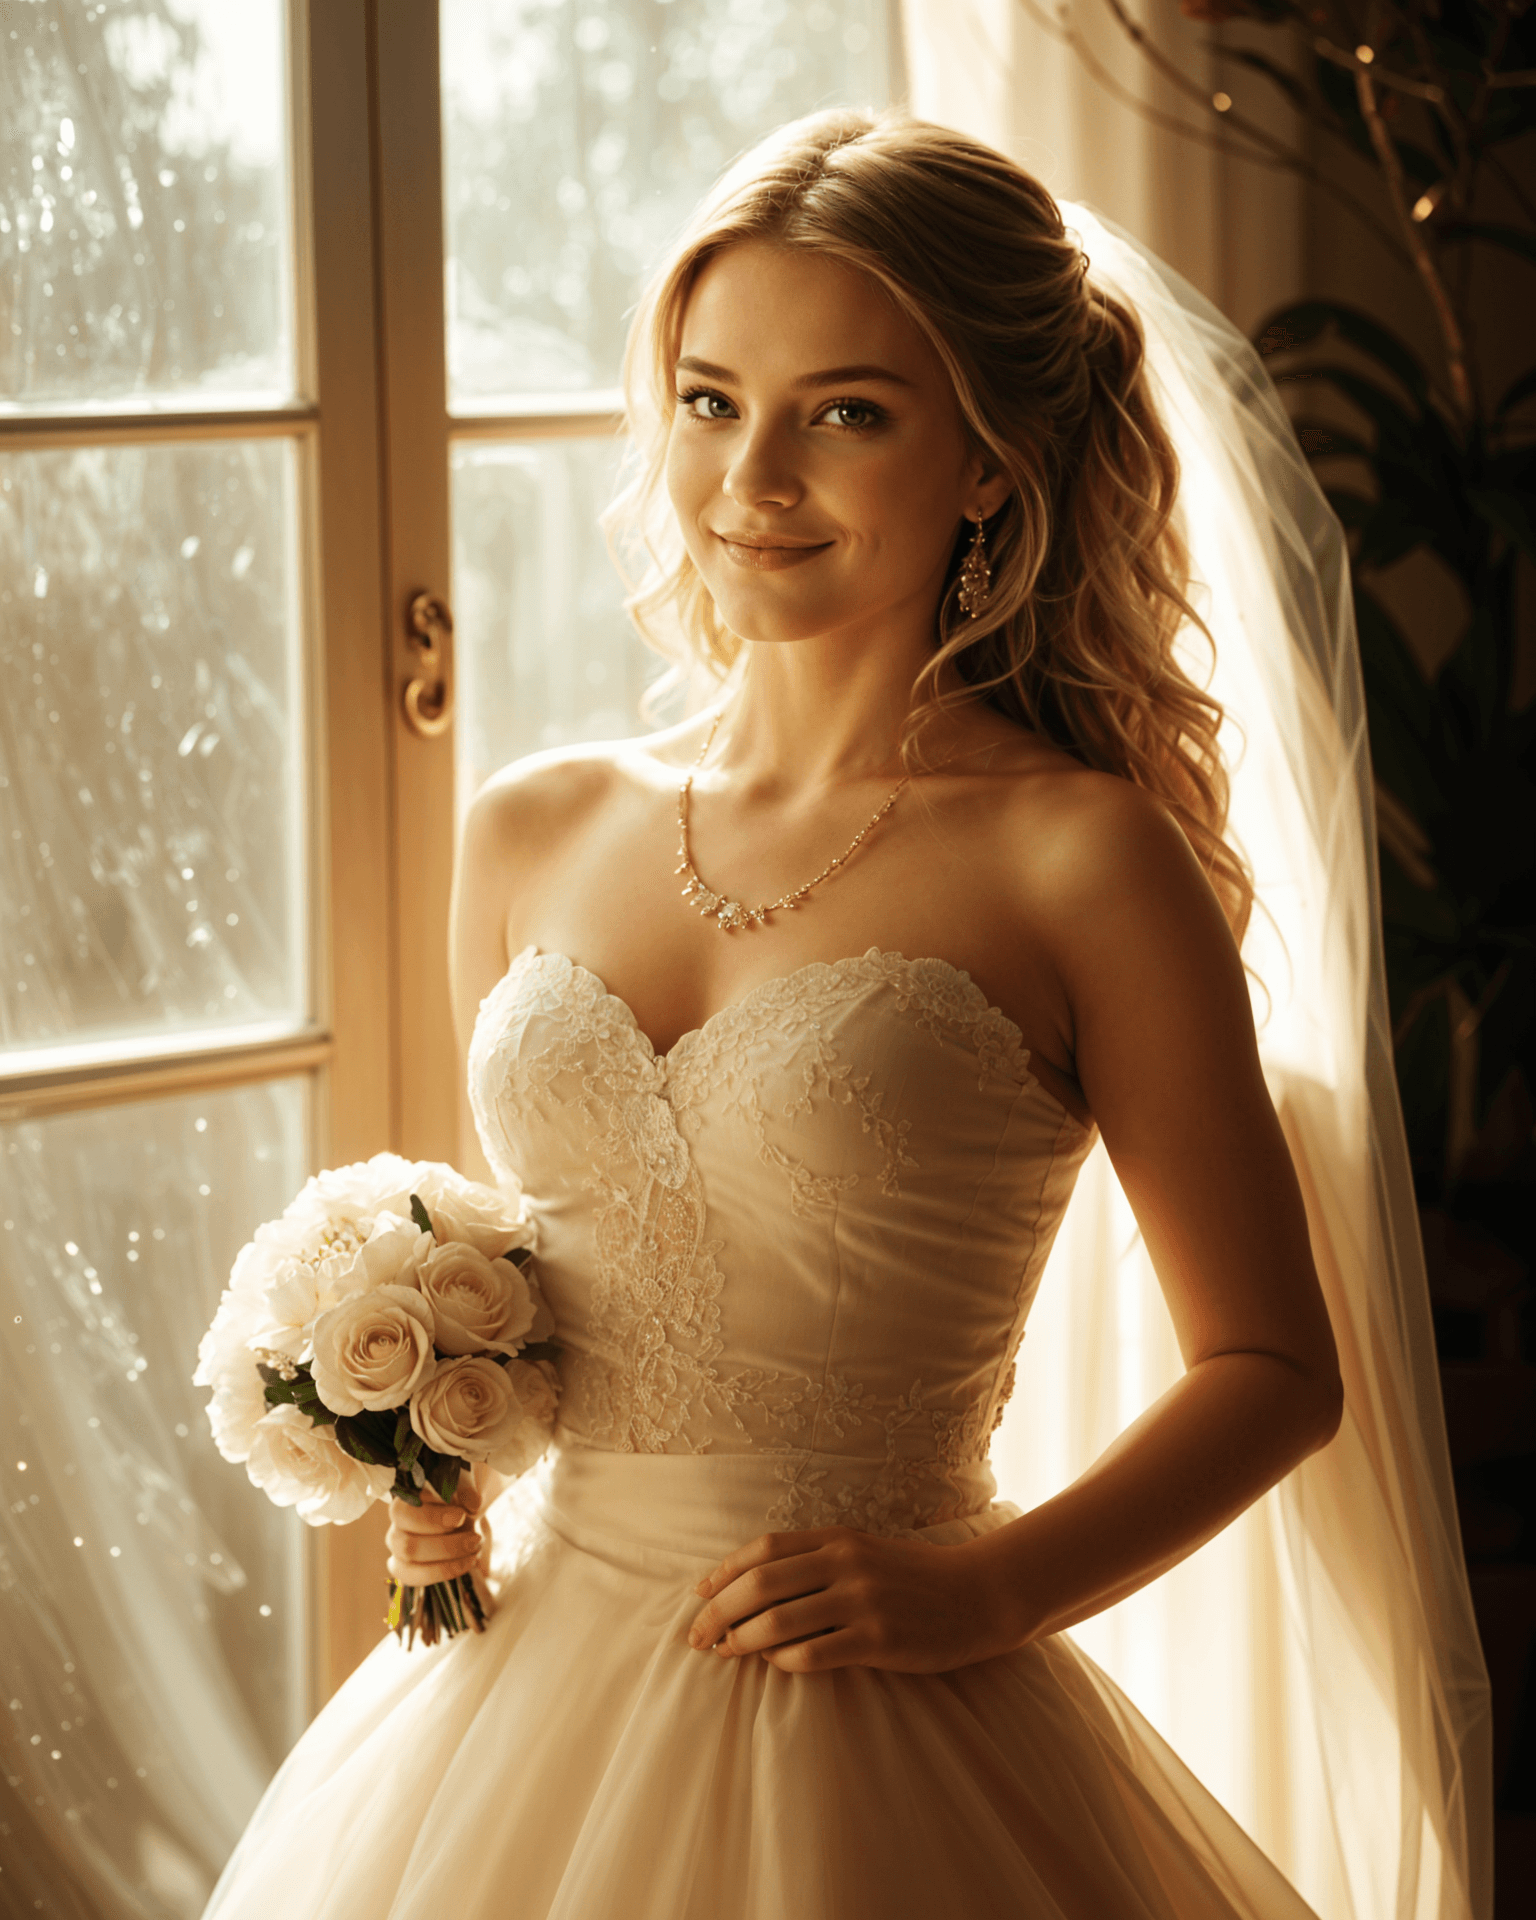 Wedding photo by a window